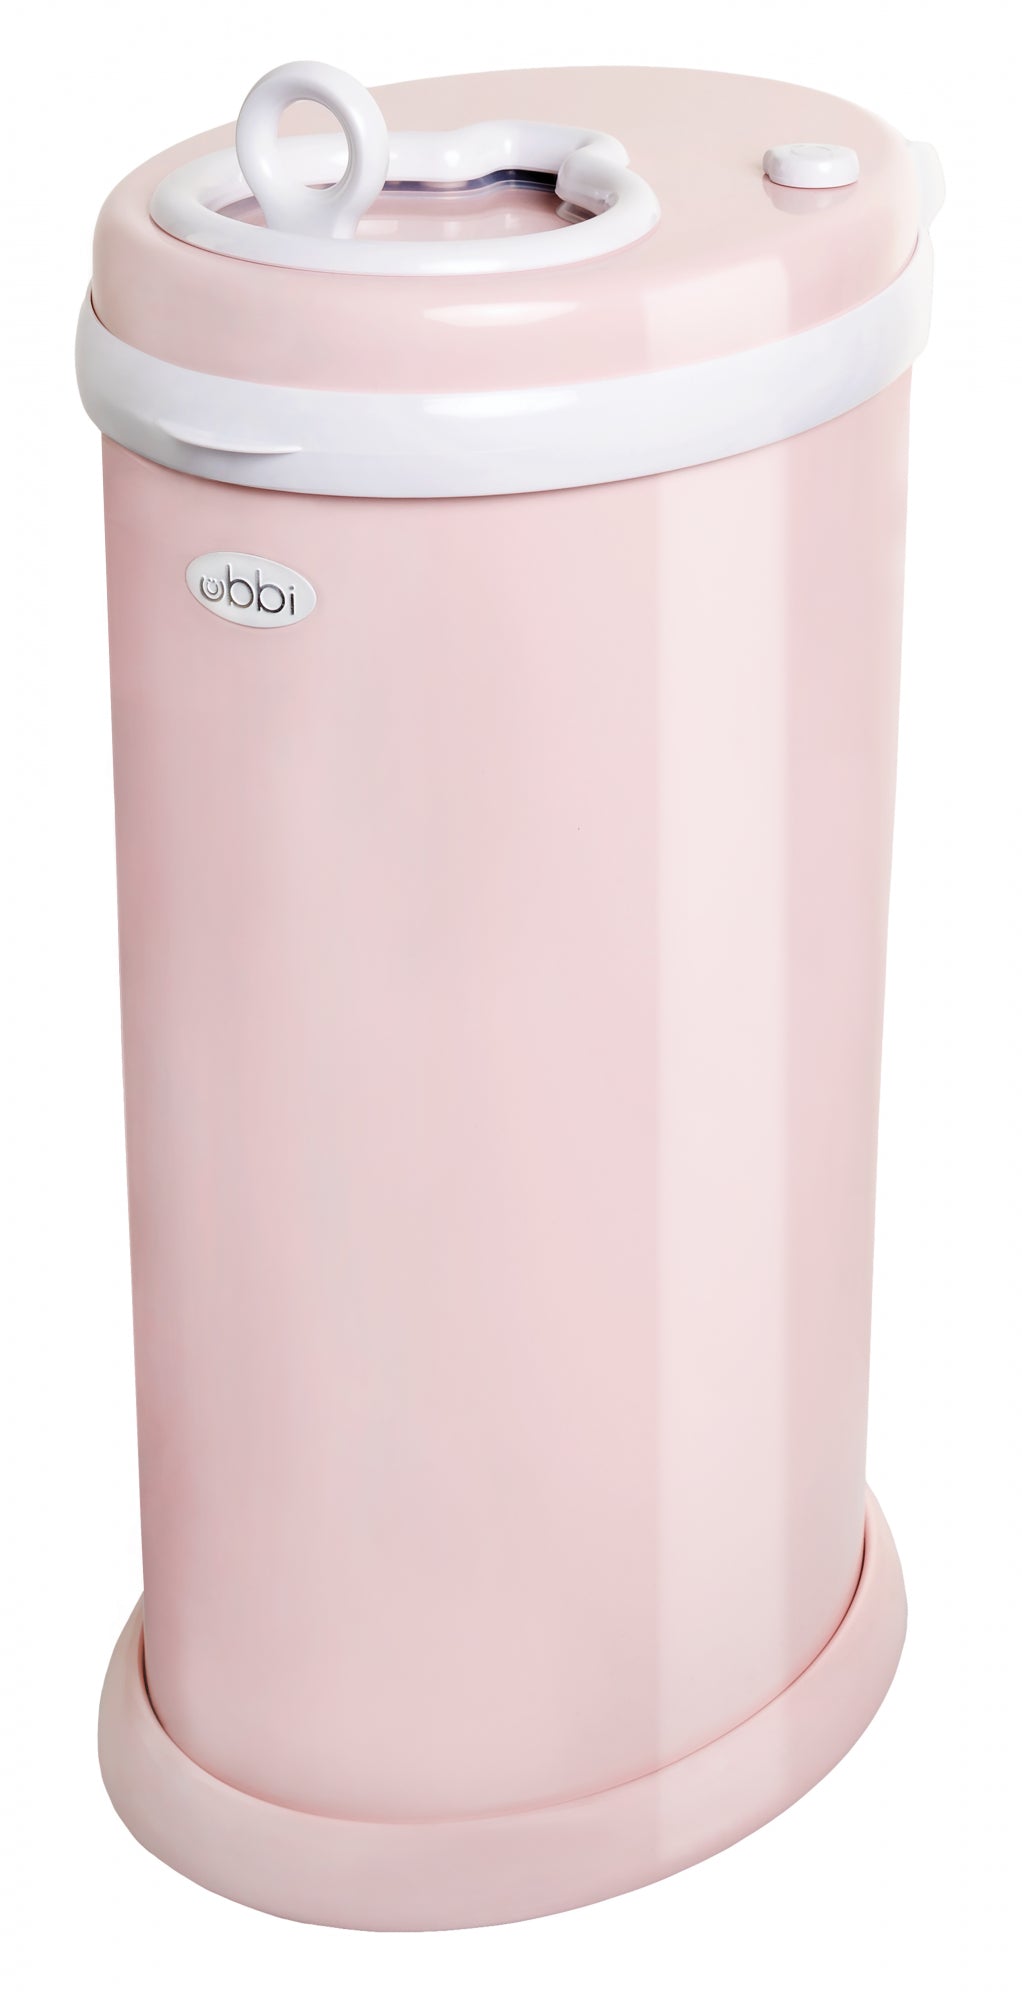 Ubbi Blöjhink Blush Rosa (Pink)